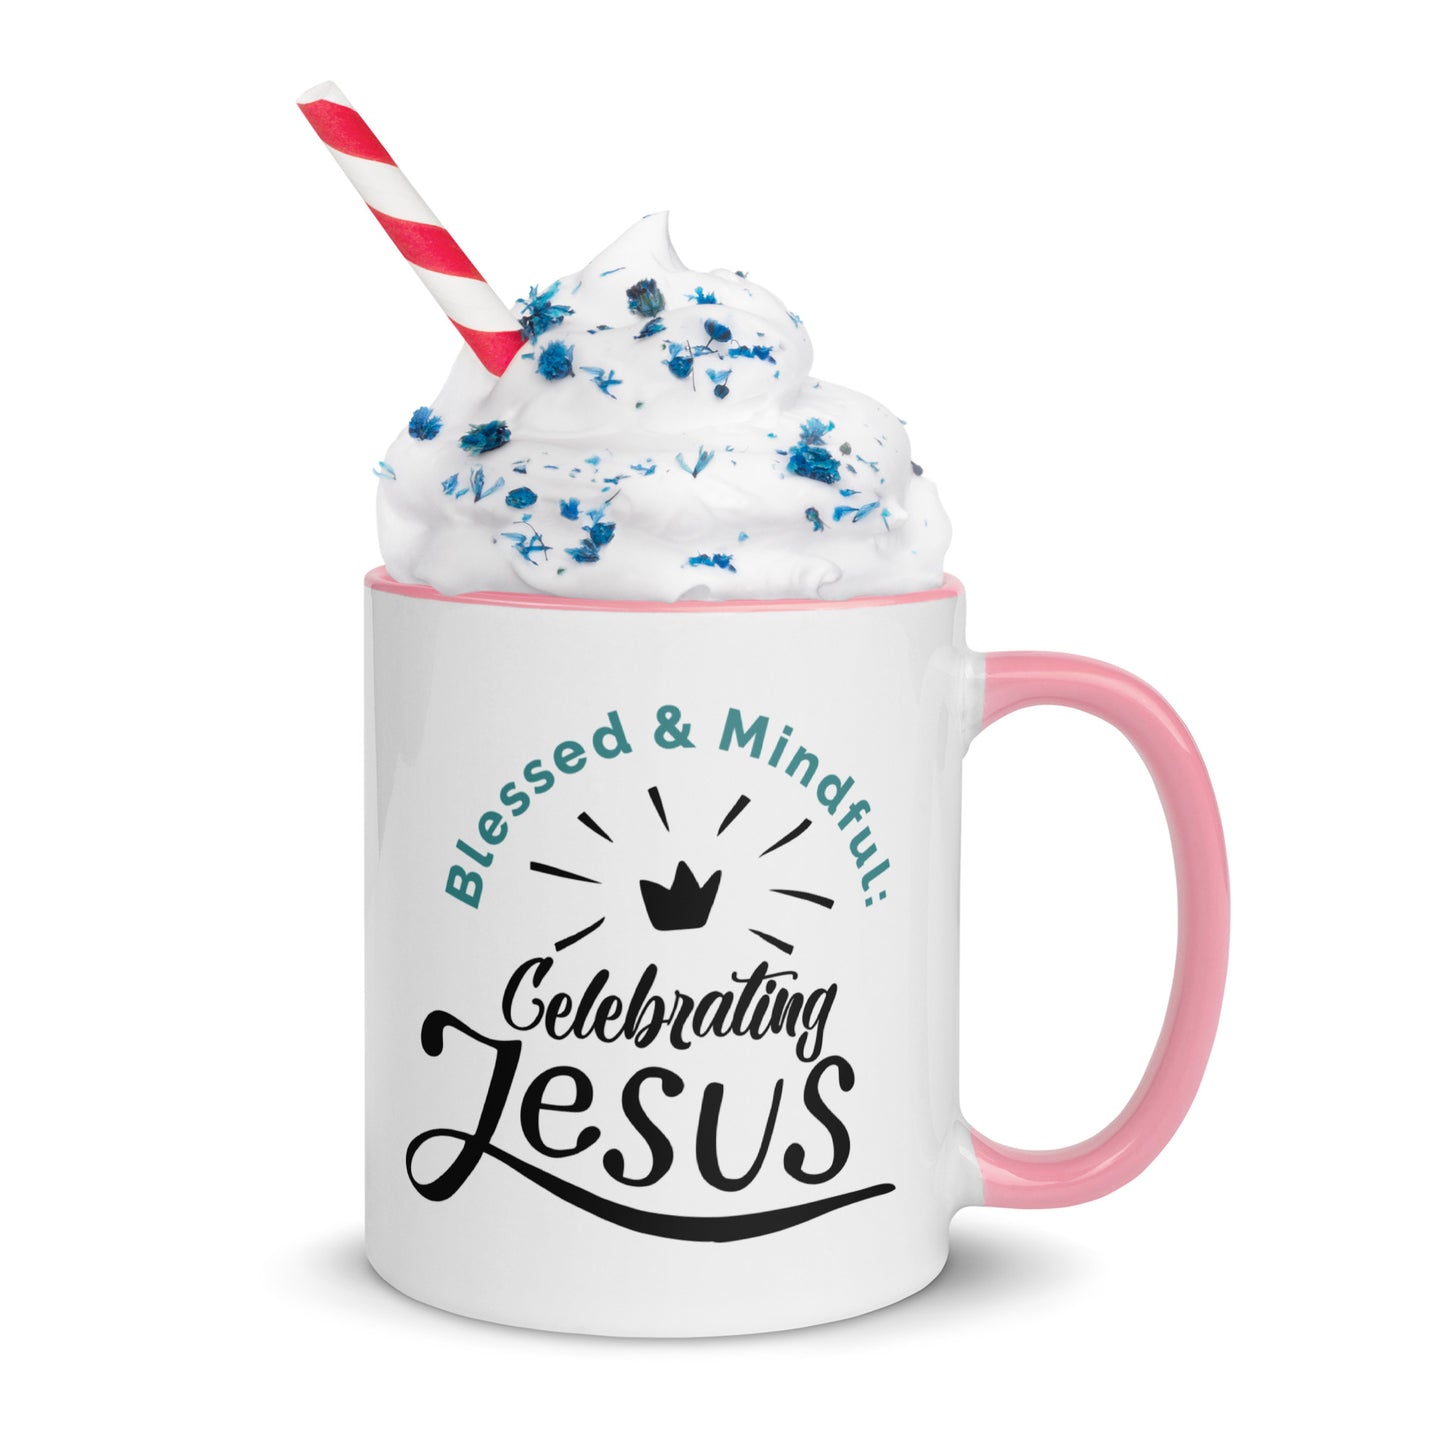 Blessed and Mindful: Double-Printed Celebrating Jesus Vibrant-Toned Mug